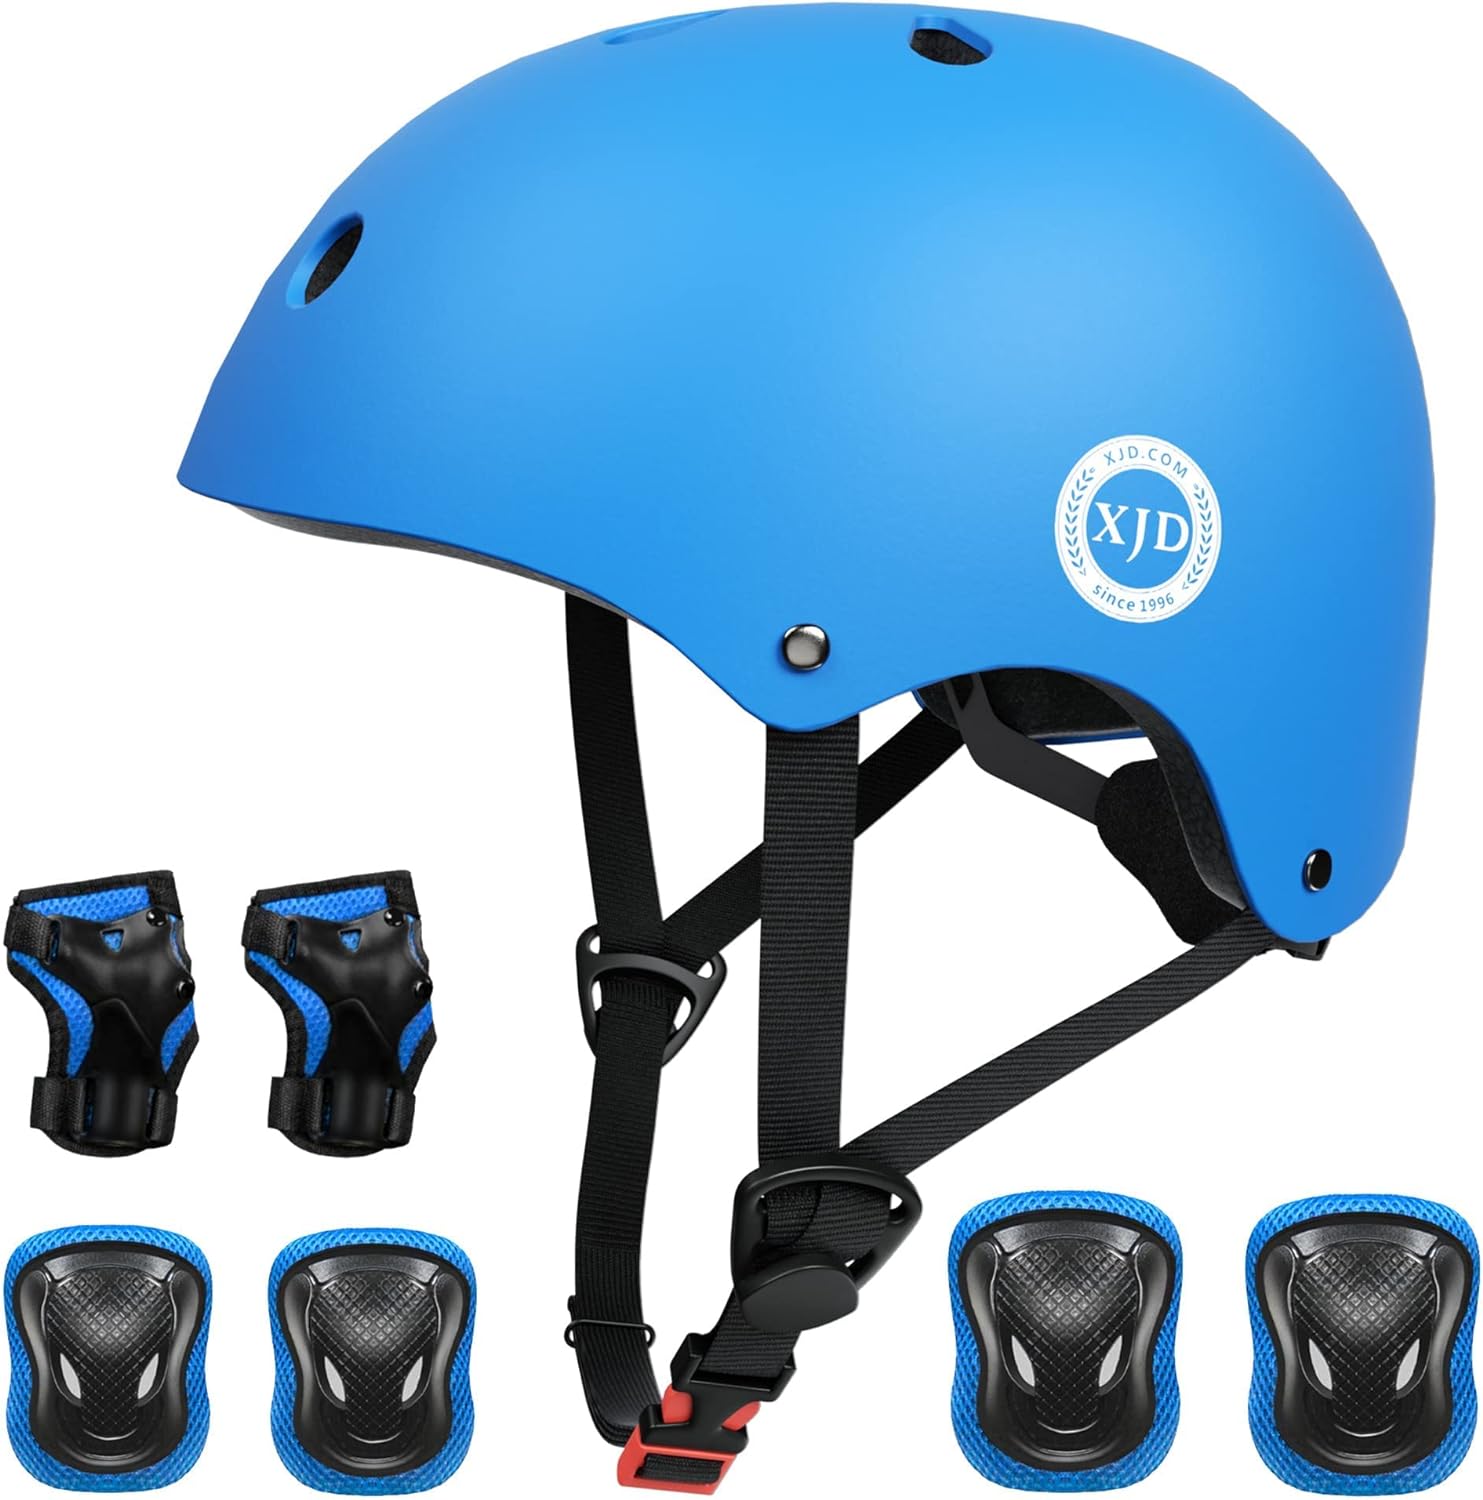 protective bike gear with helmet